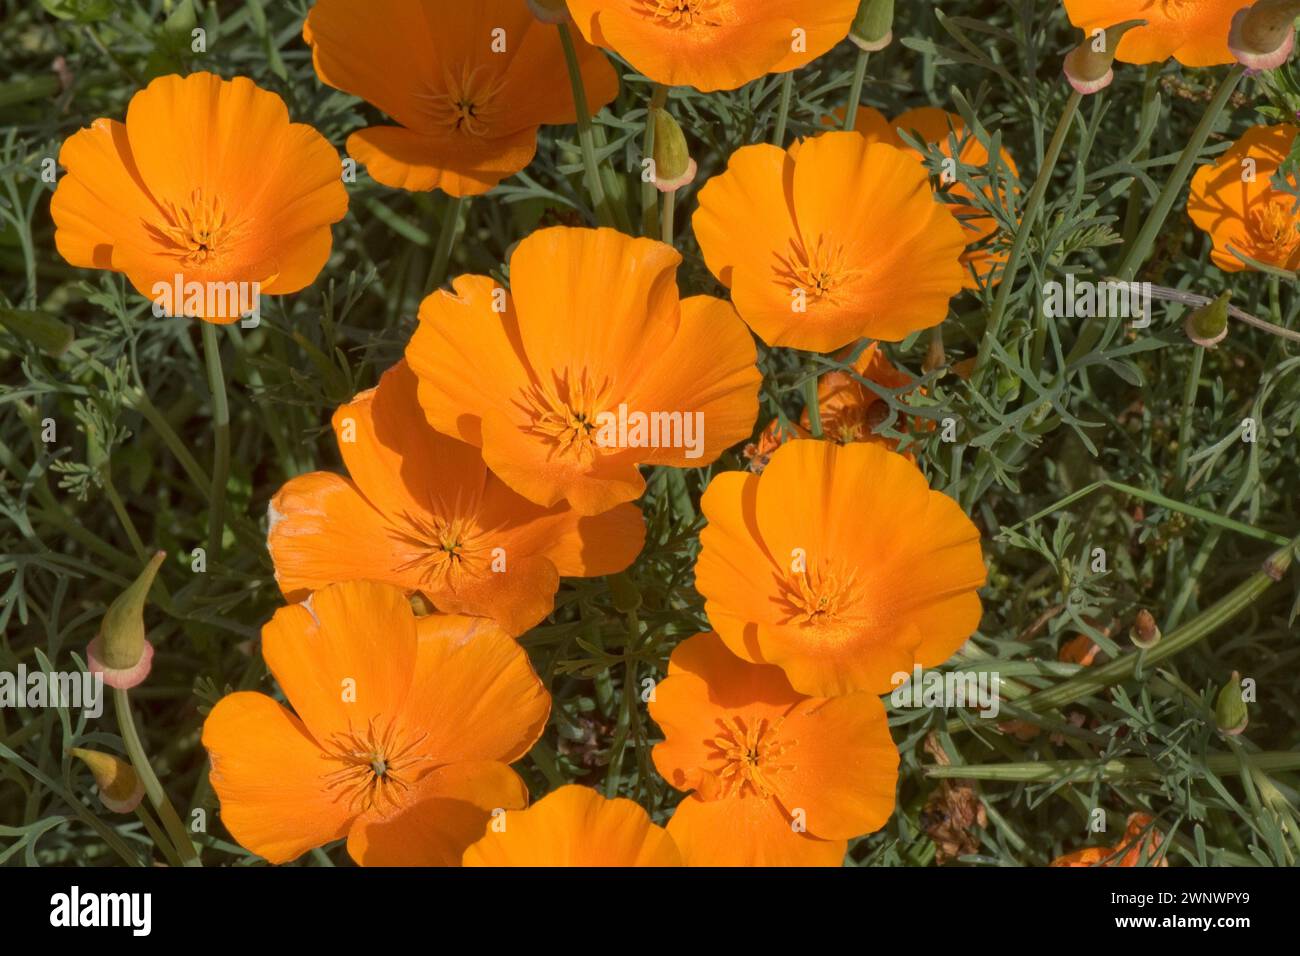 Vivid orange cup-shaped flowers of California poppy (Eschscholzia californica) perennial or annual ornamental garden plant, July Stock Photo